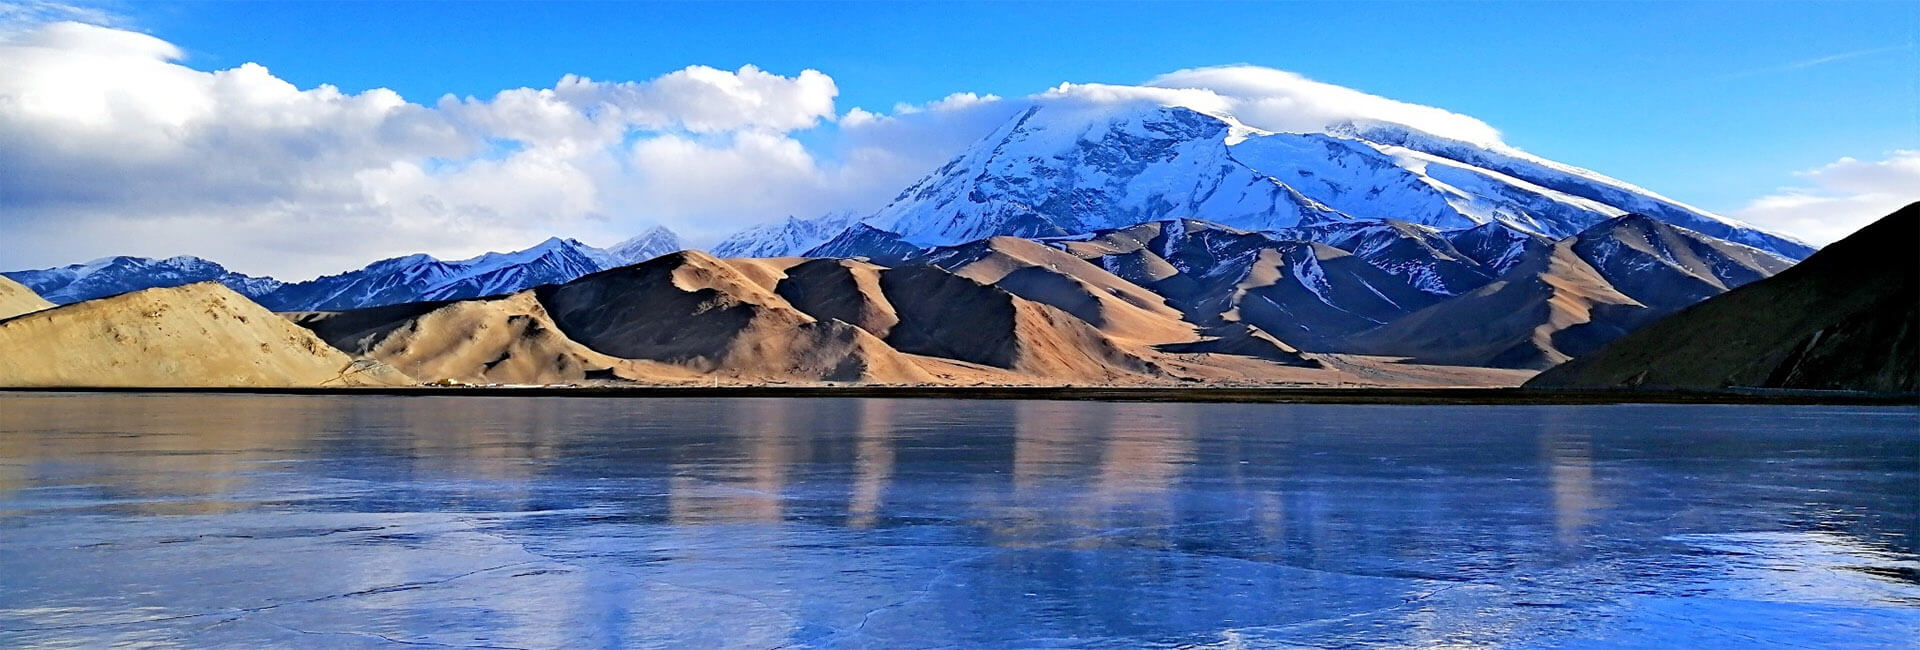 5 Days Legendary Pamirs Tour from Kashgar to Tashkurgan 2022/2023